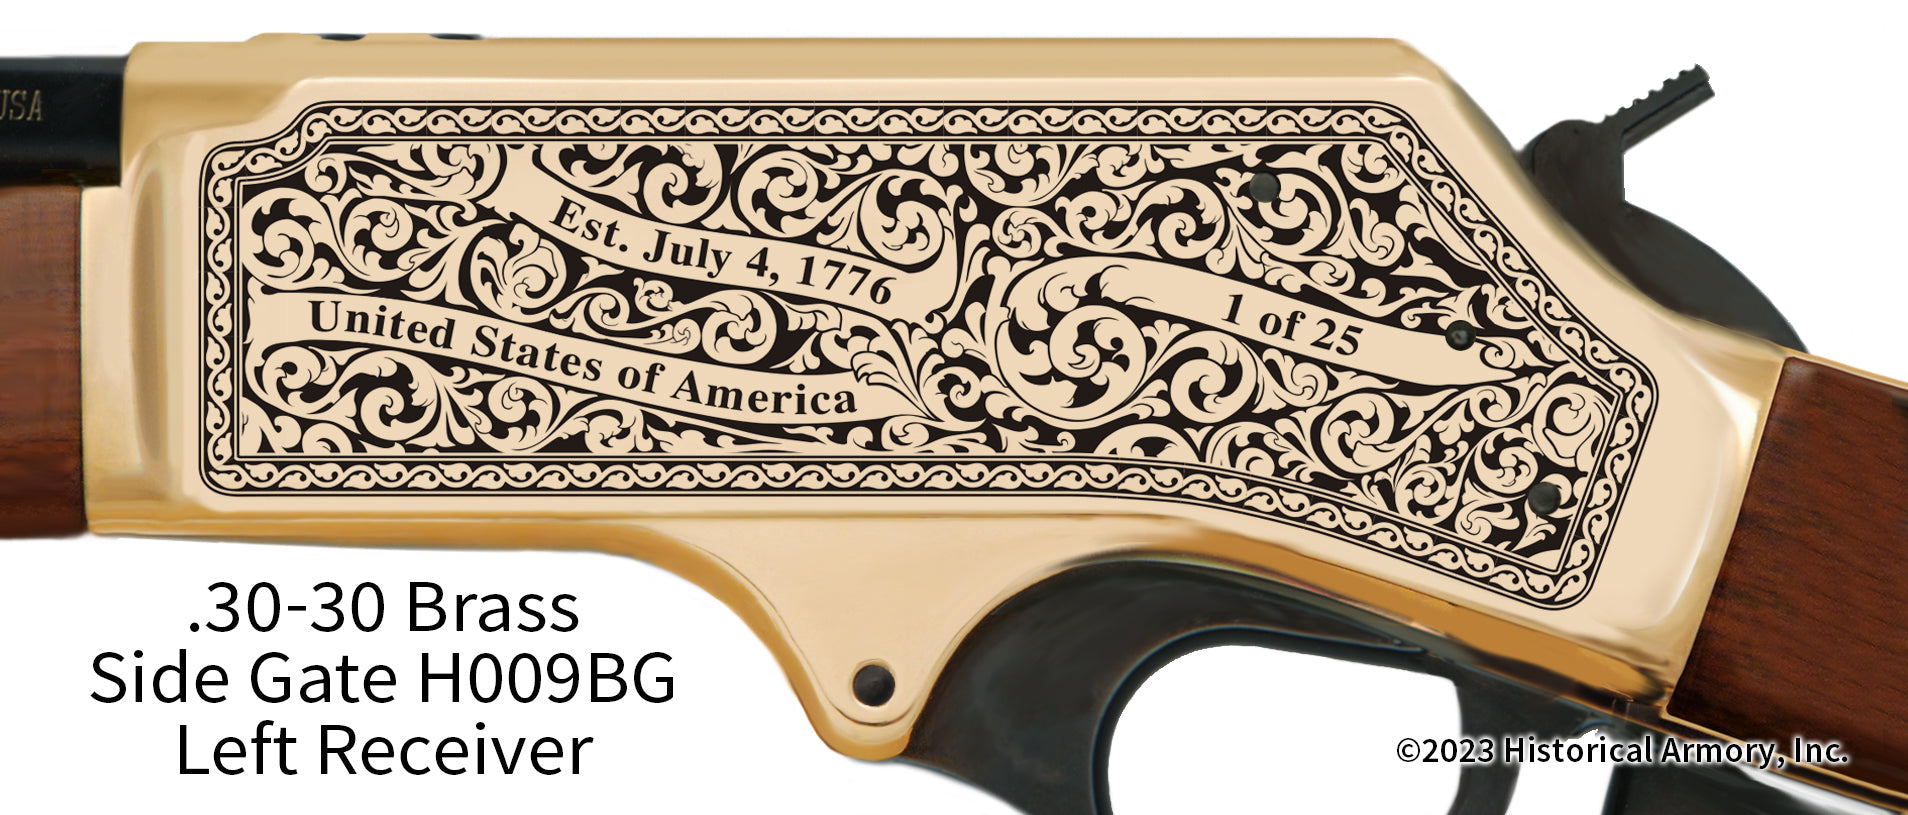 Dickey County North Dakota Engraved Henry .30-30 Brass Side Gate Rifle